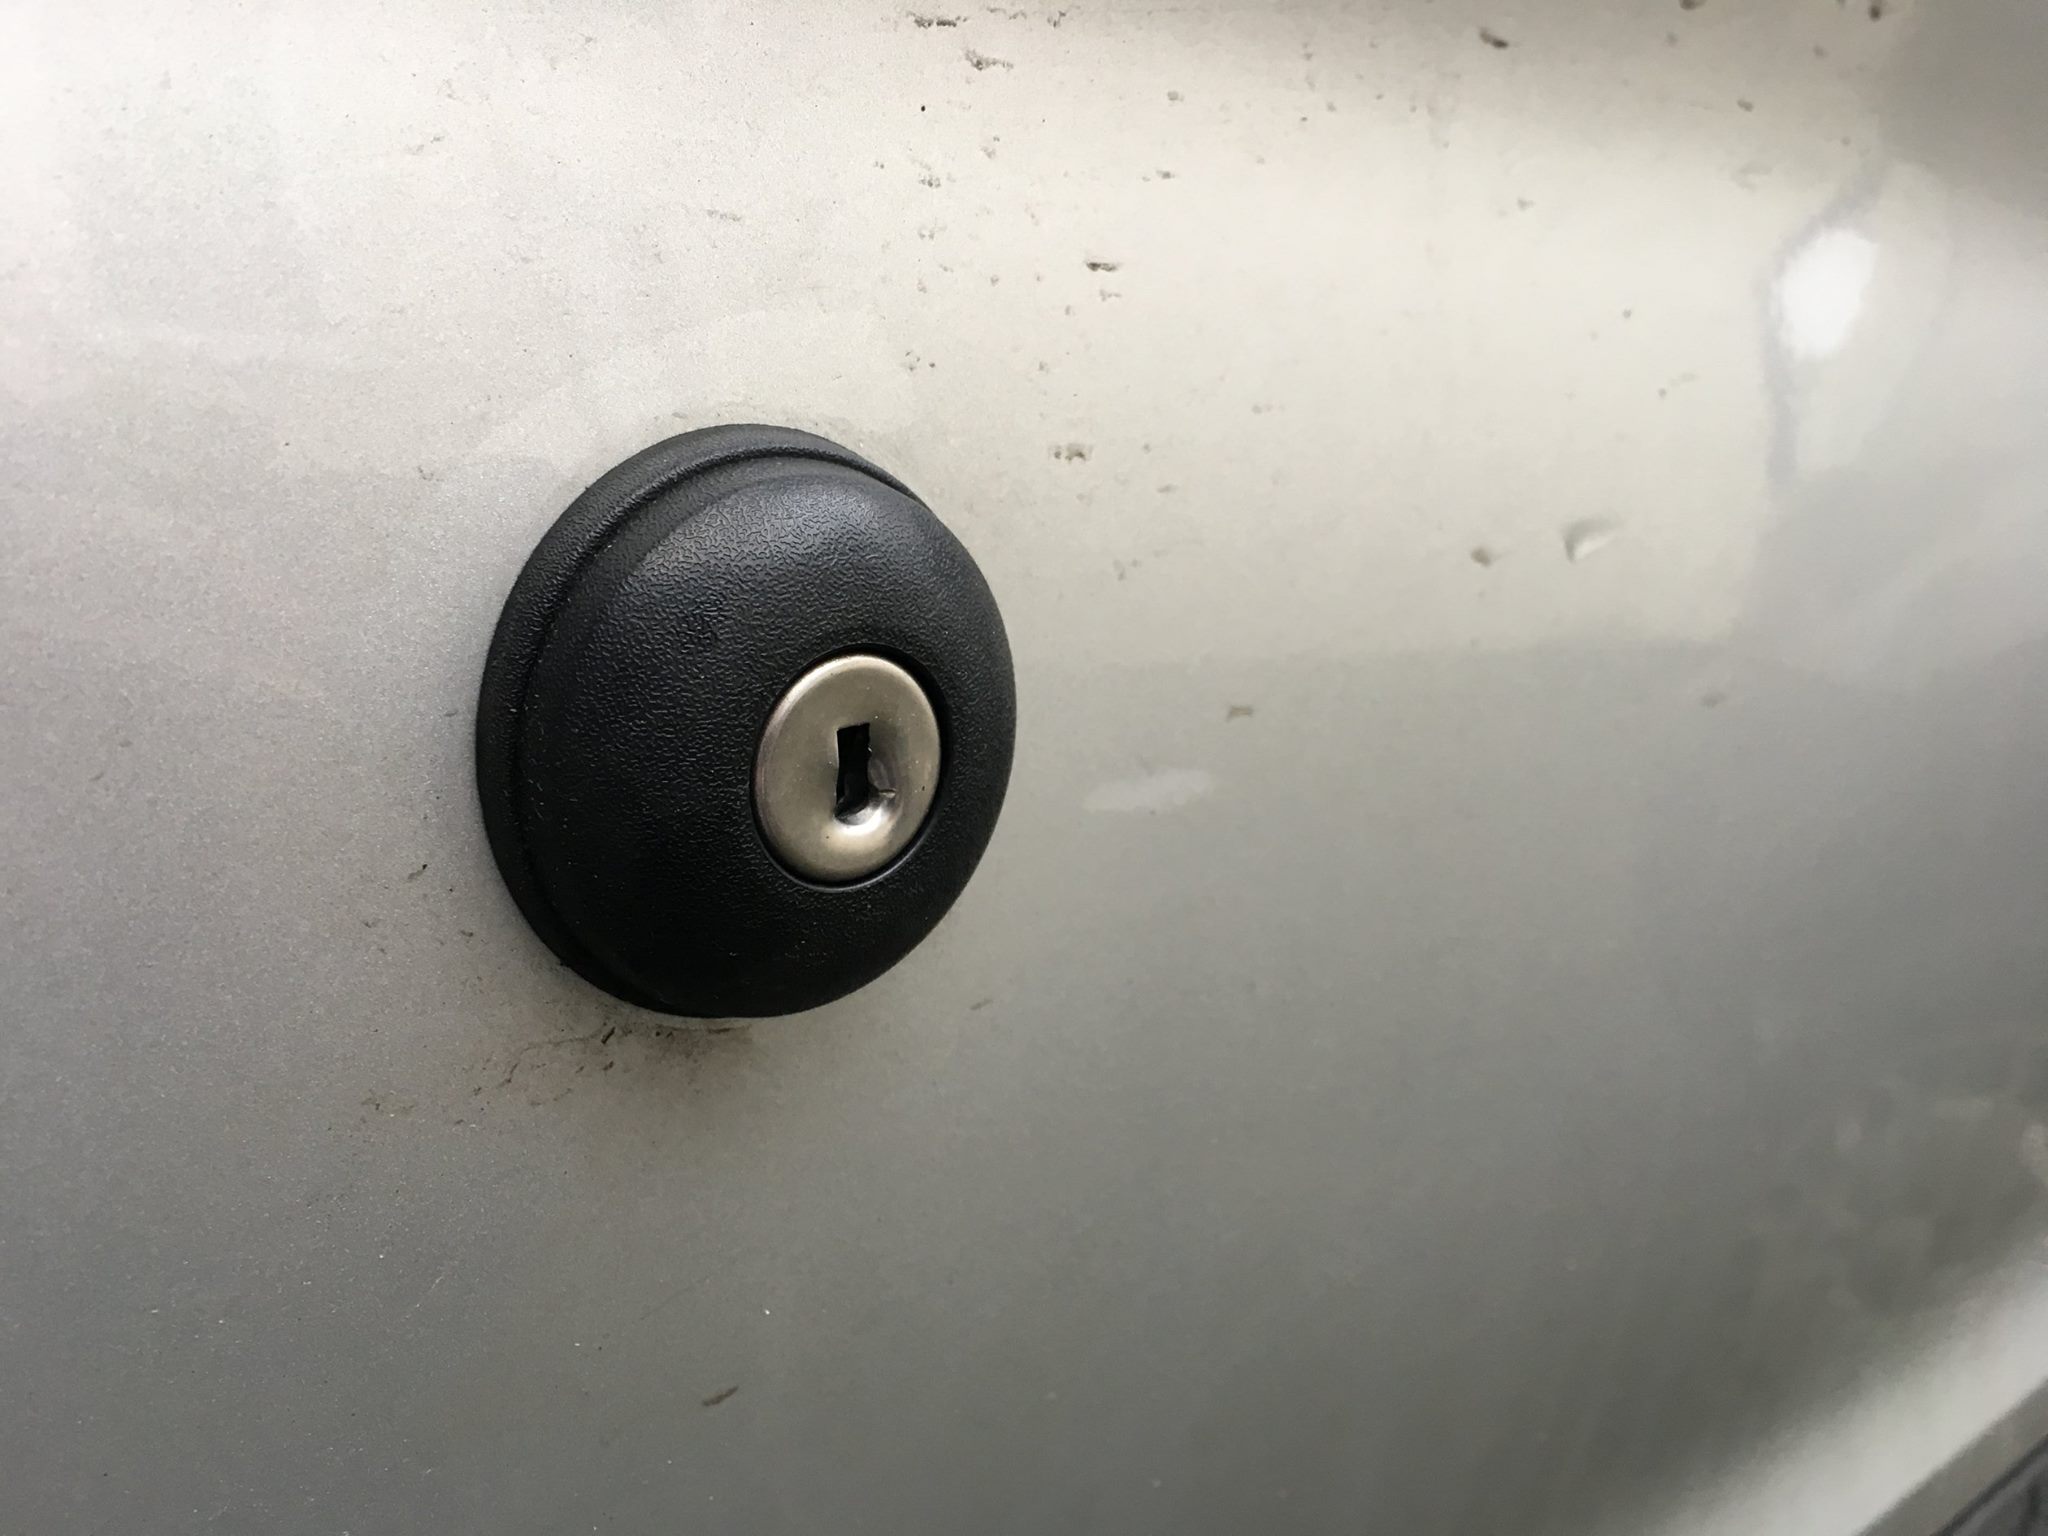 A damaged Ford Transit door lock before installation of a replock.